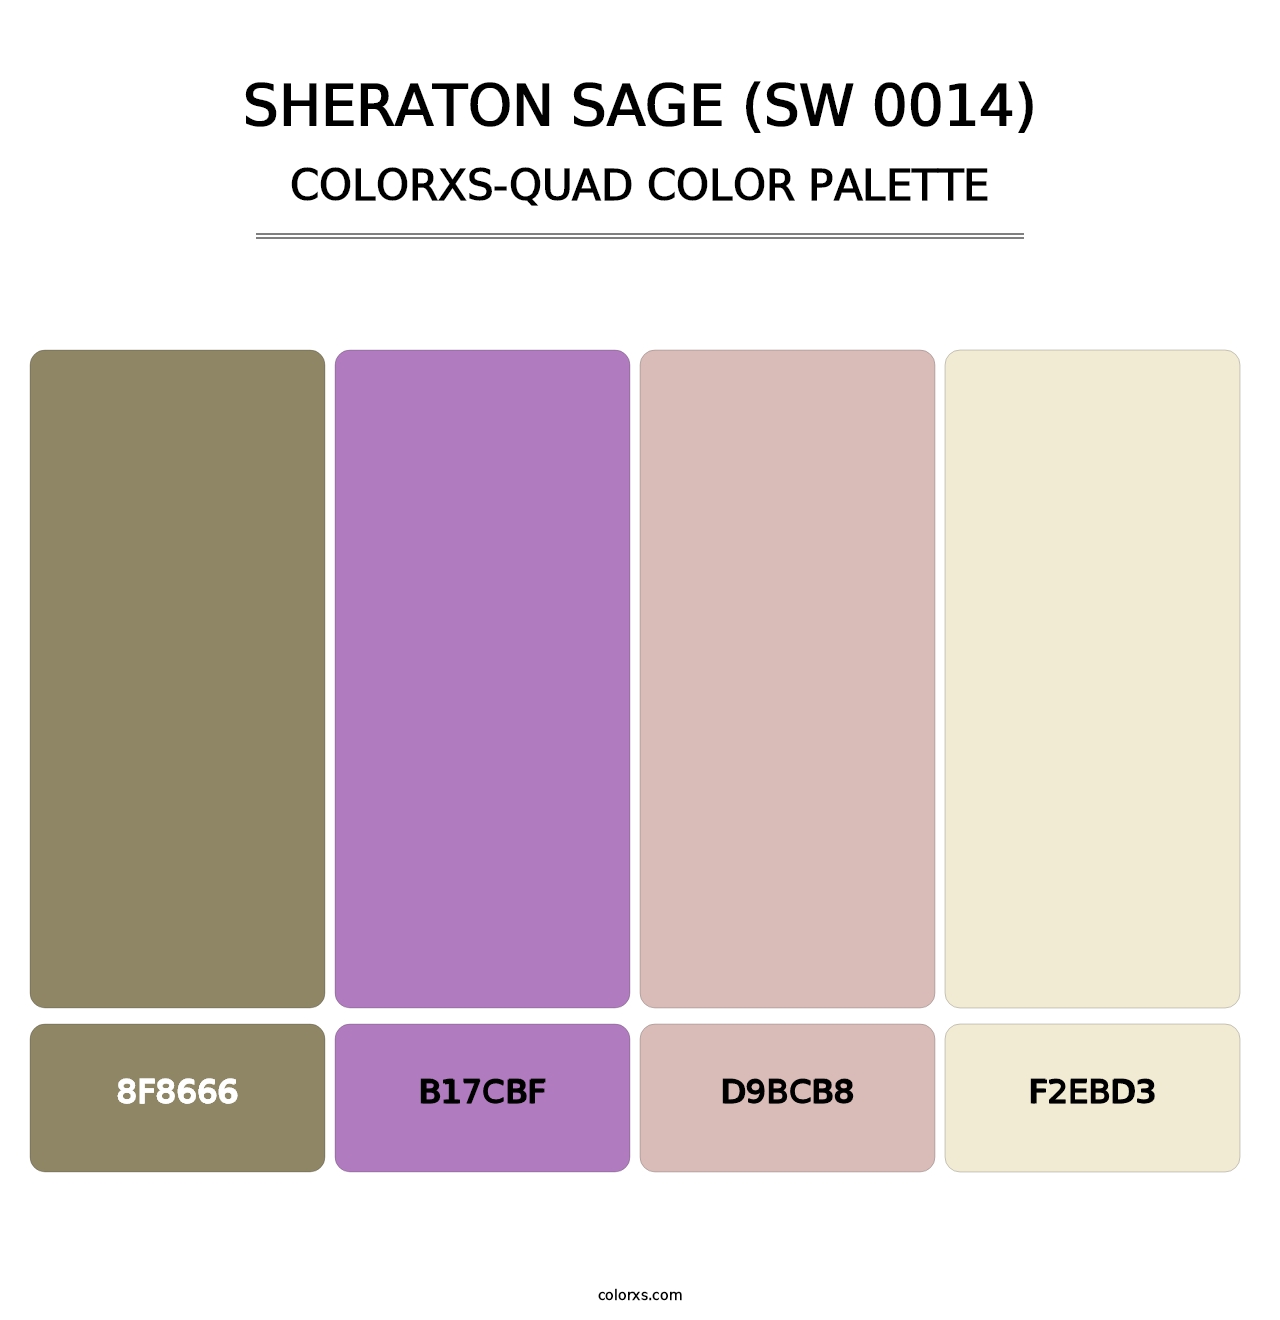 Sheraton Sage (SW 0014) - Colorxs Quad Palette